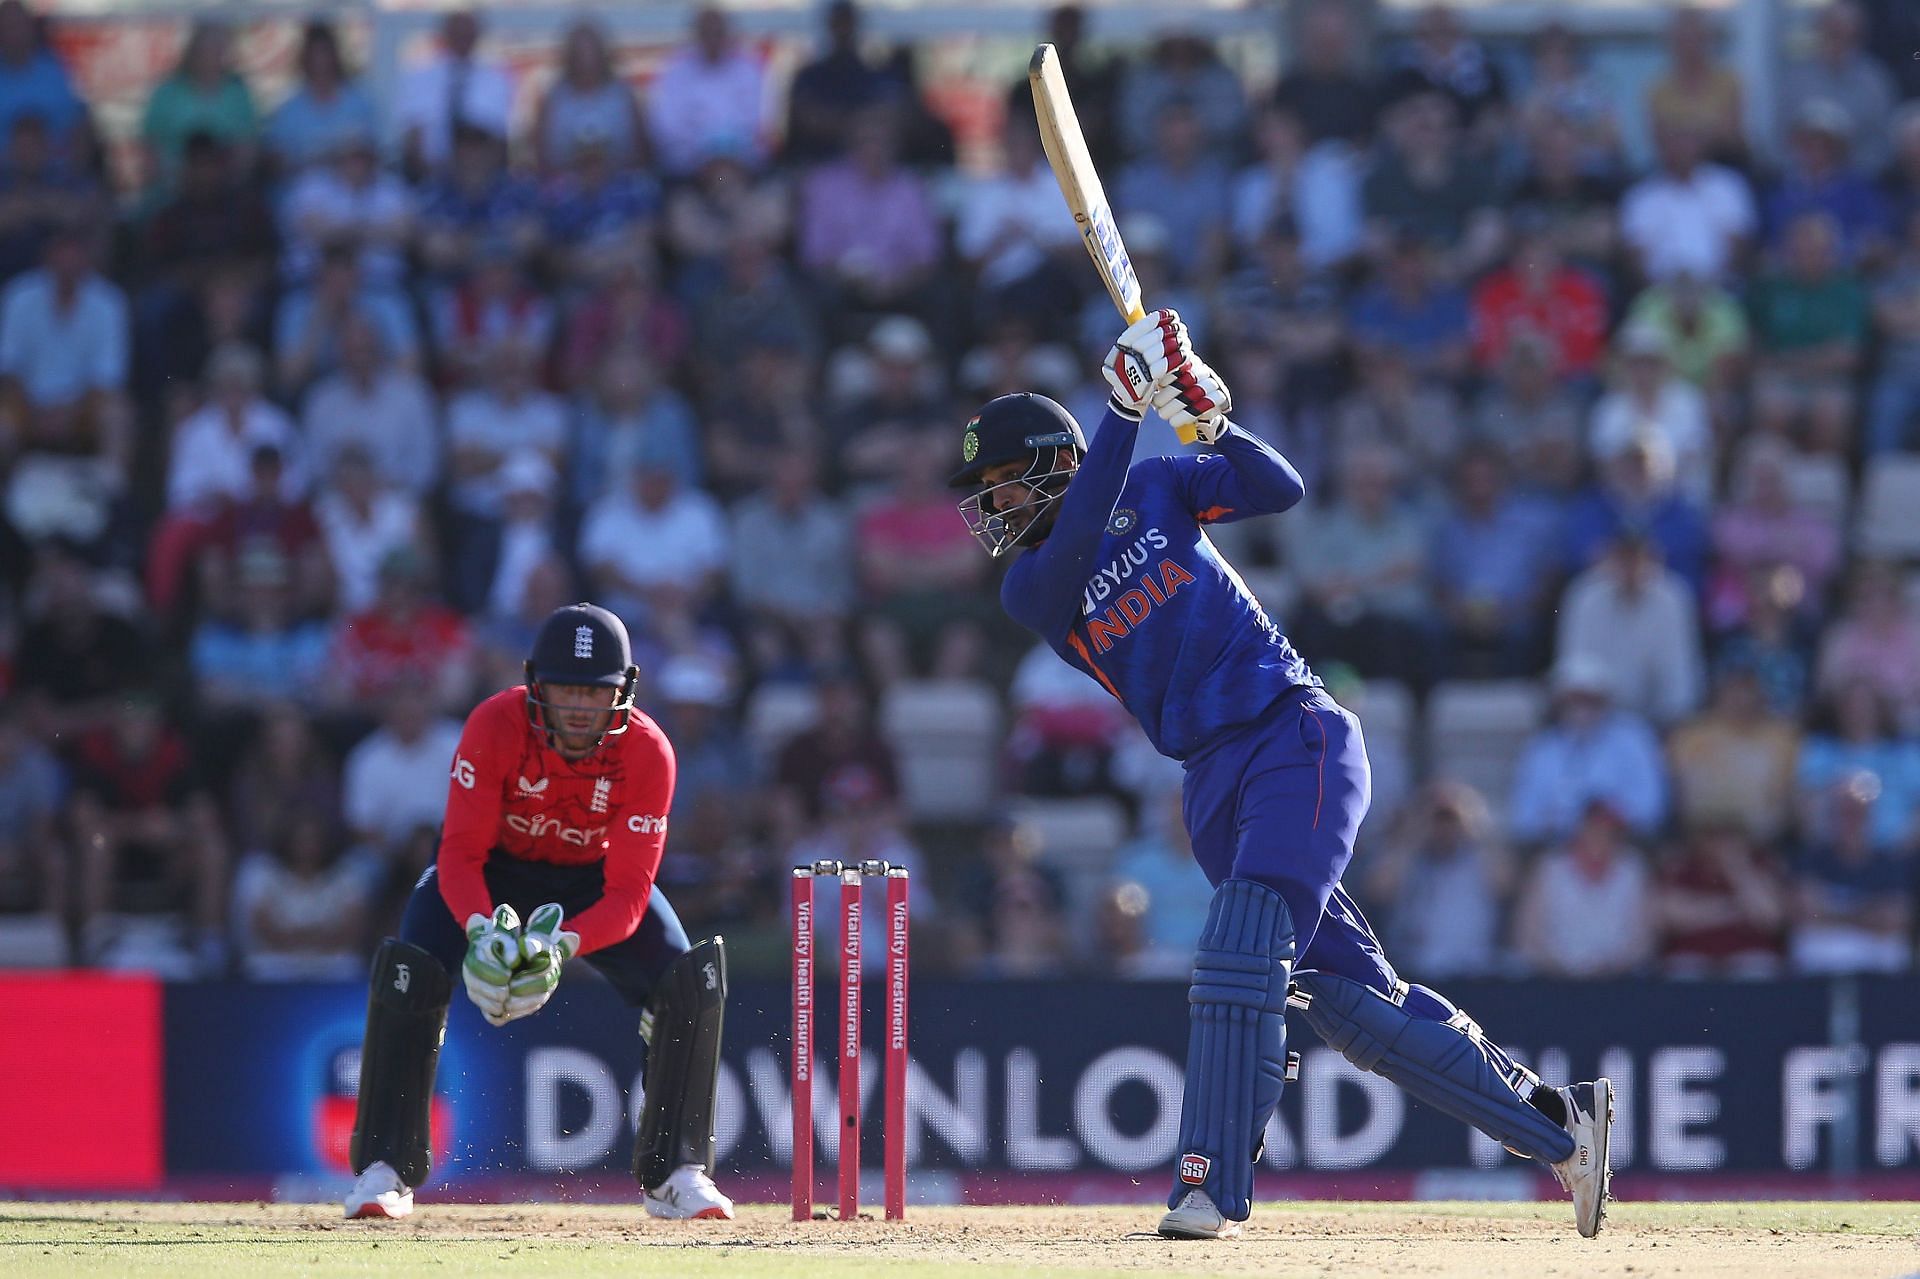 Deepak Hooda batting in full flow against England. Pic: Getty Images